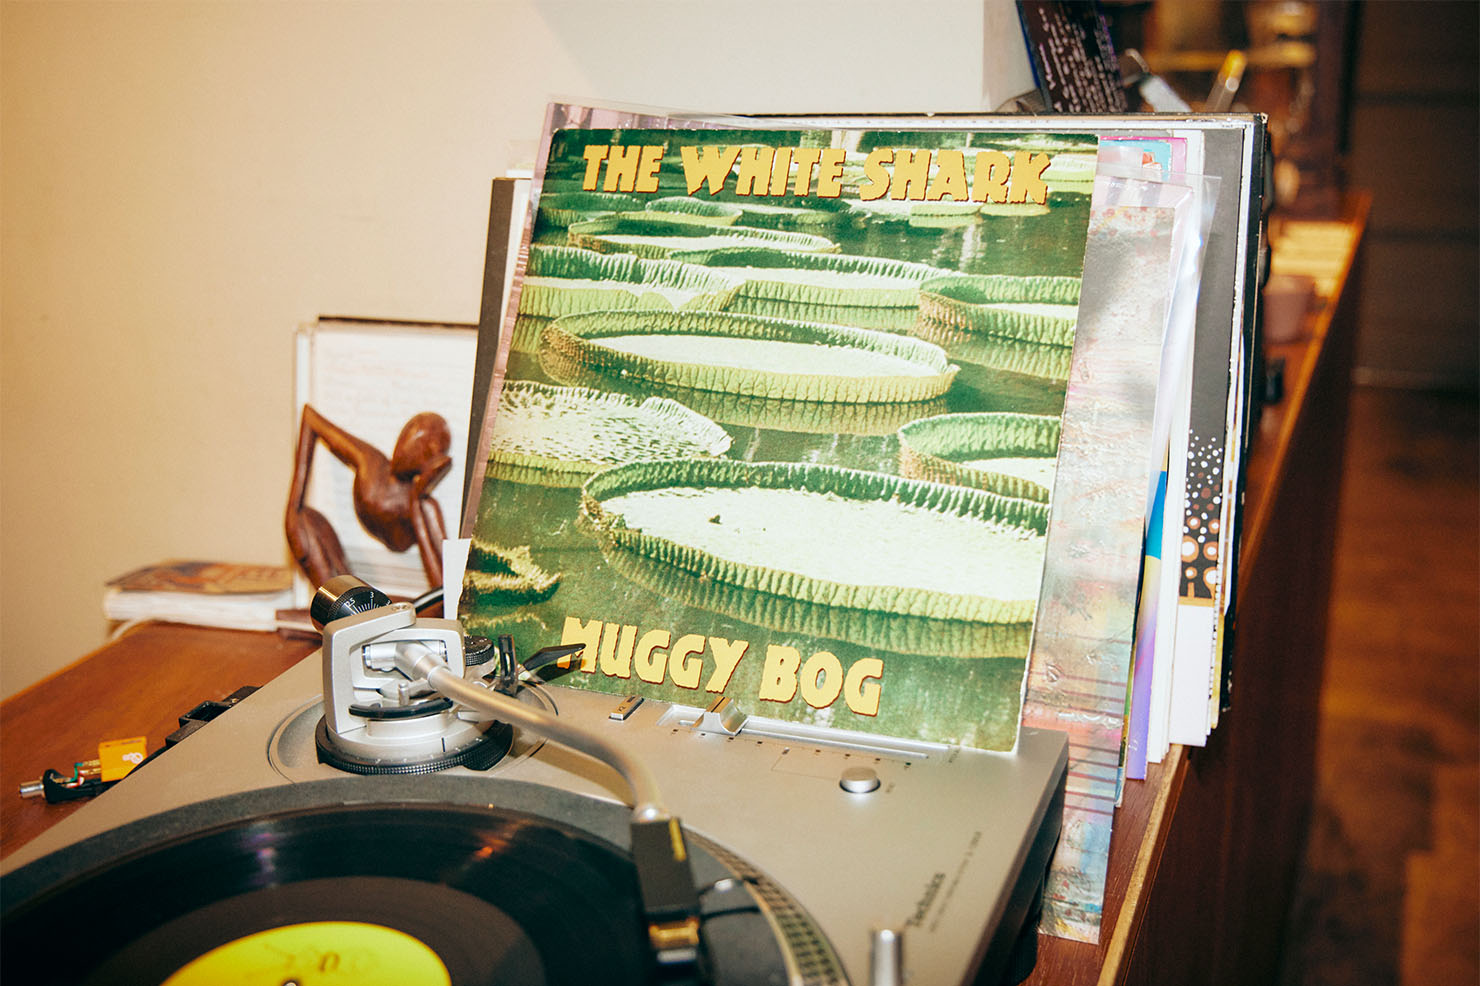 「VM760SLC」 で視聴　The White Shark 『Muggy Dog』 収録曲 「Do You Know The Way To San Jose」